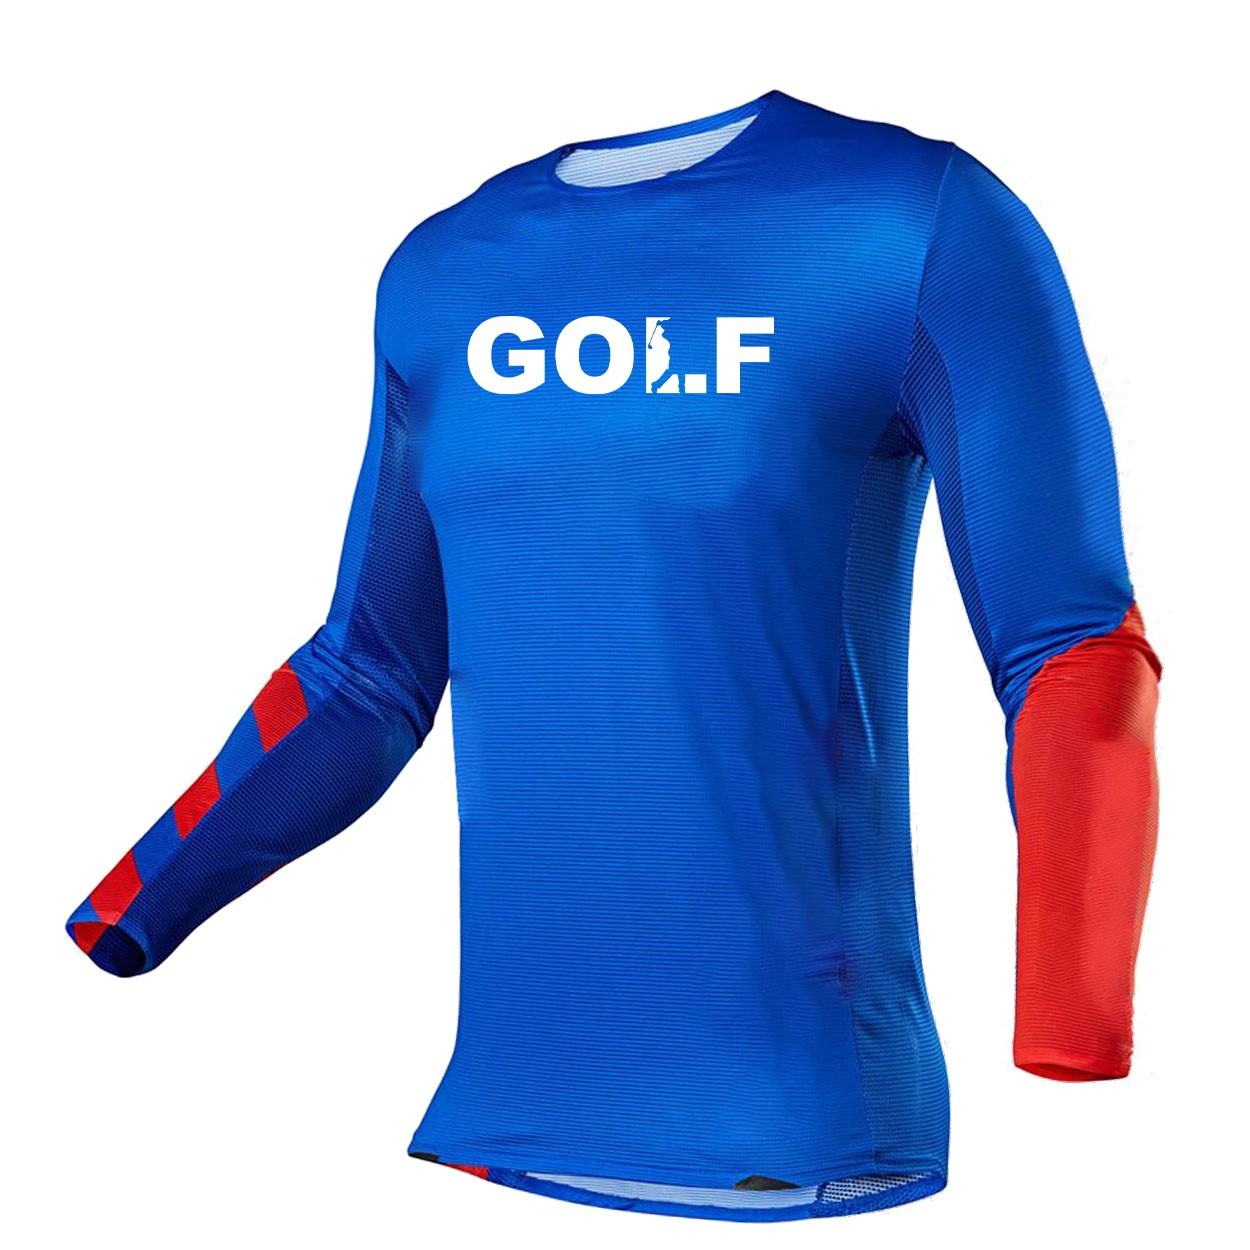 Golf Swing Logo Classic Performance Jersey Long Sleeve Shirt Blue/Red